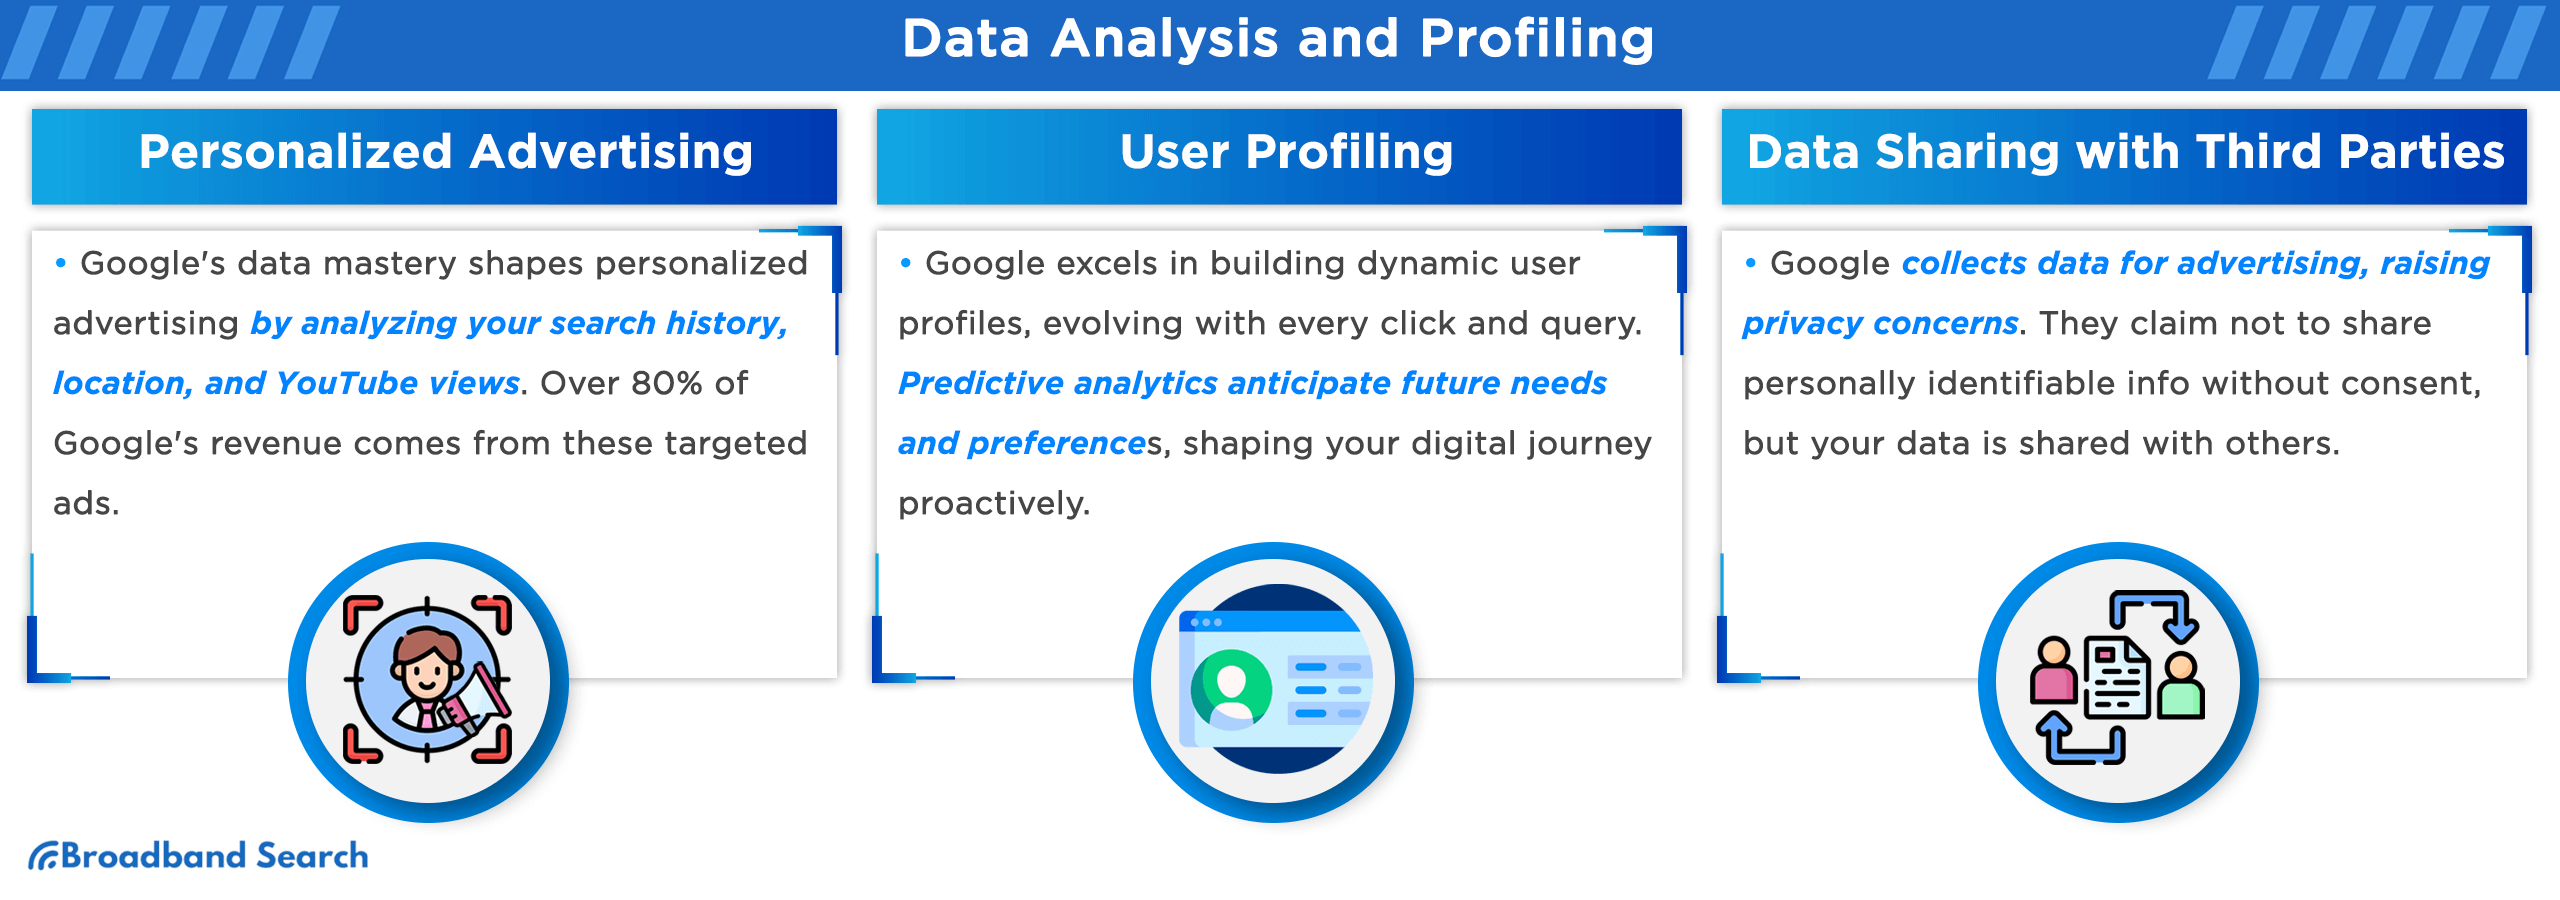 Data analysis an profiling